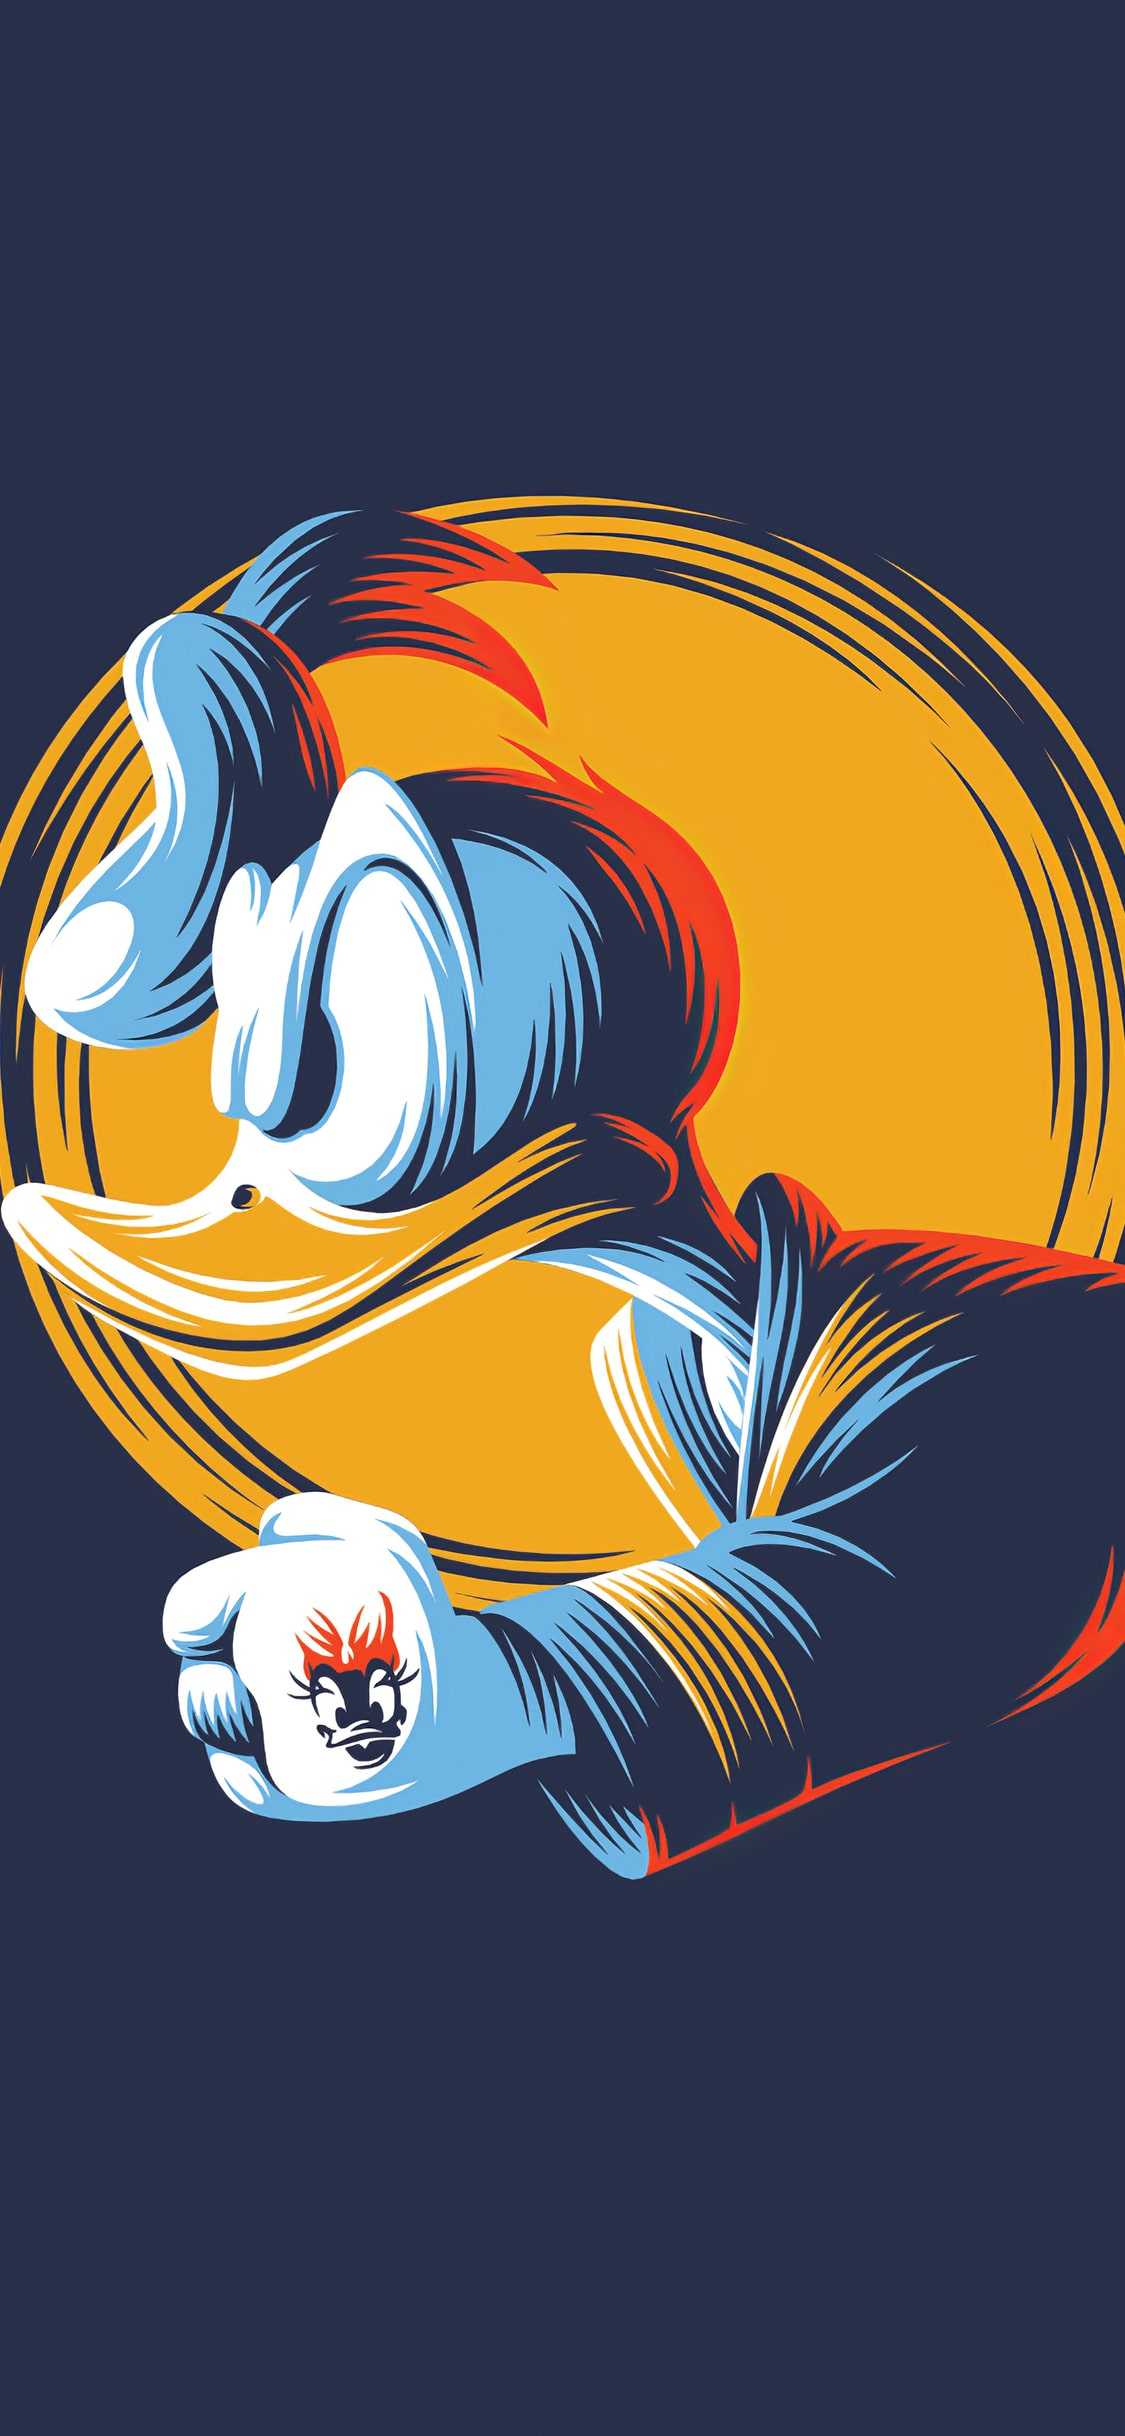 Wallpaper ID 418298  Movie Disney Phone Wallpaper Donald Duck 1080x1920  free download